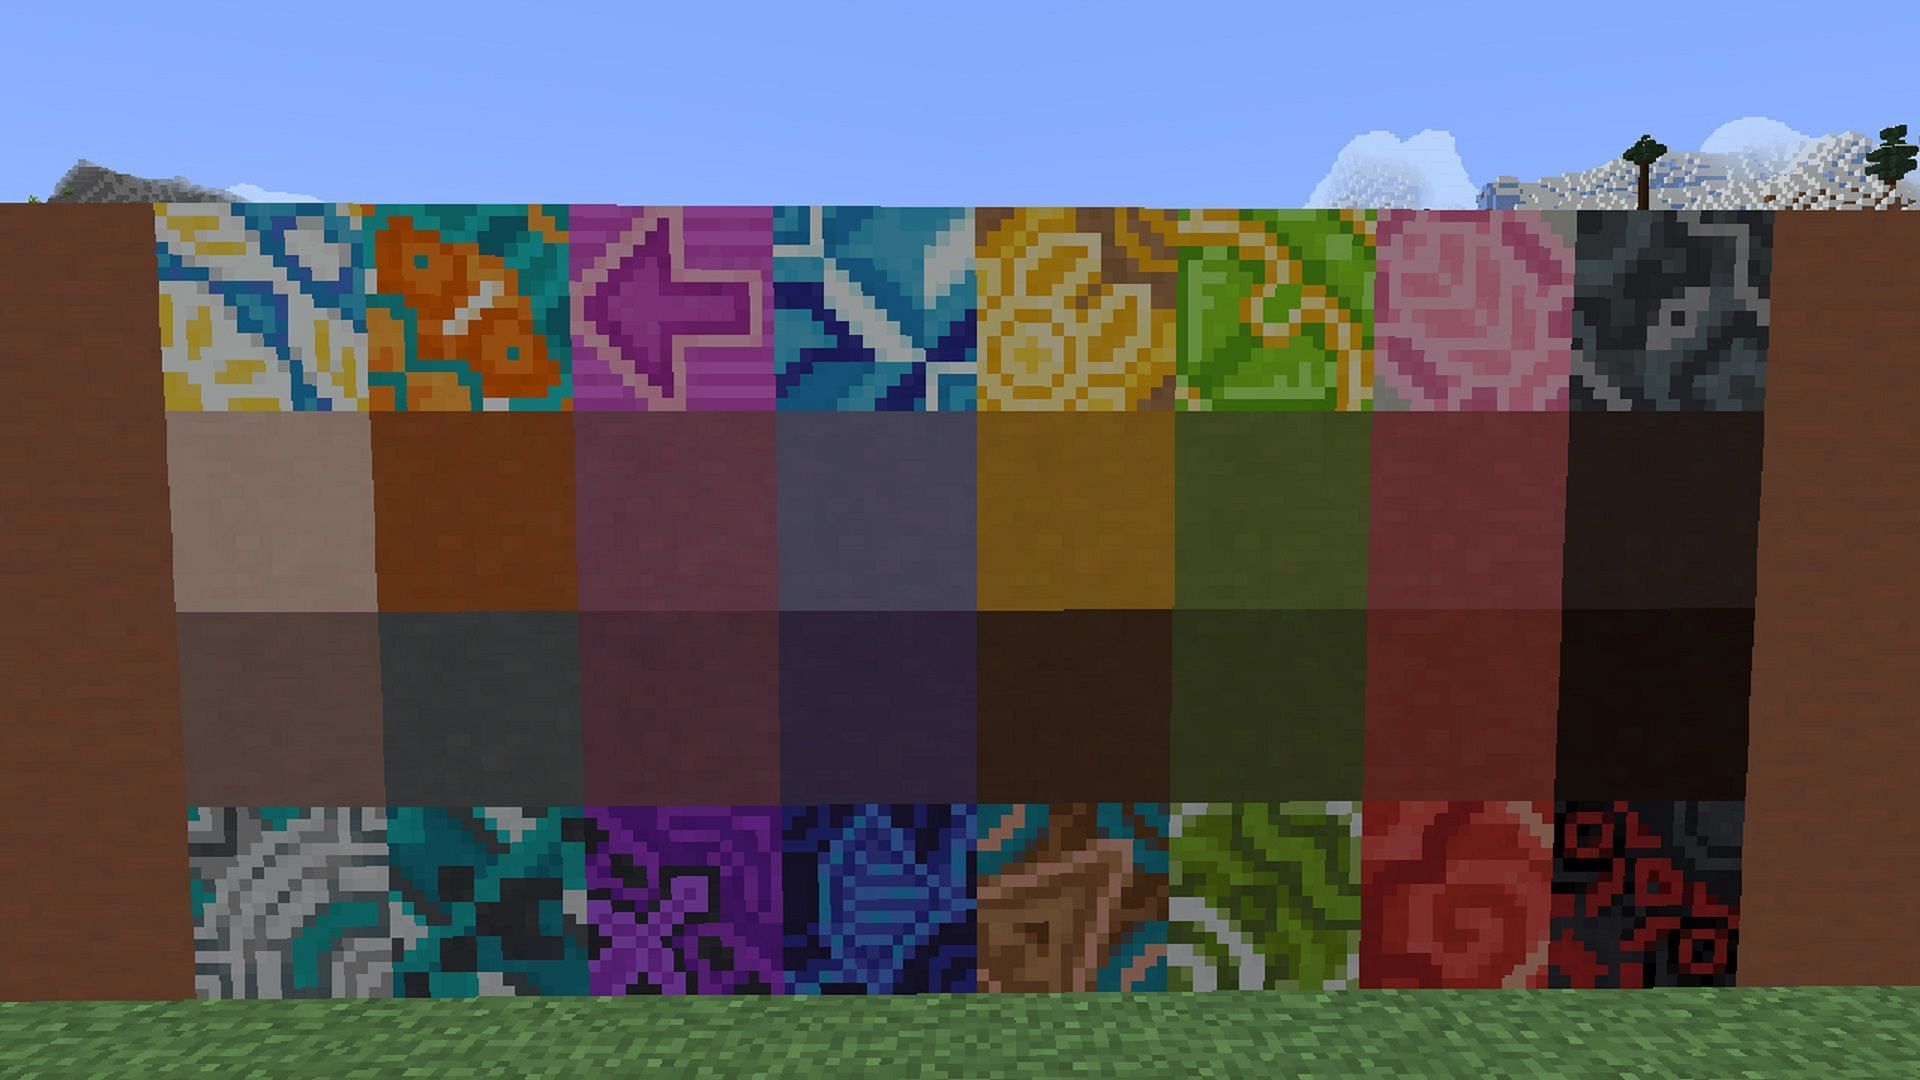 Terracotta and glazed terracotta blocks in Minecraft (Image via Mojang)